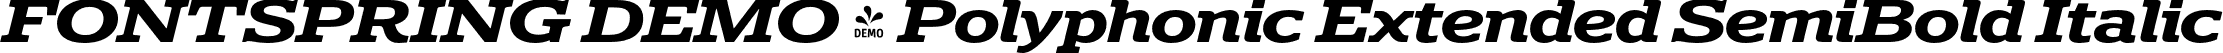 FONTSPRING DEMO - Polyphonic Extended SemiBold Italic font | Fontspring-DEMO-polyphonic-extendedsemibolditalic.otf